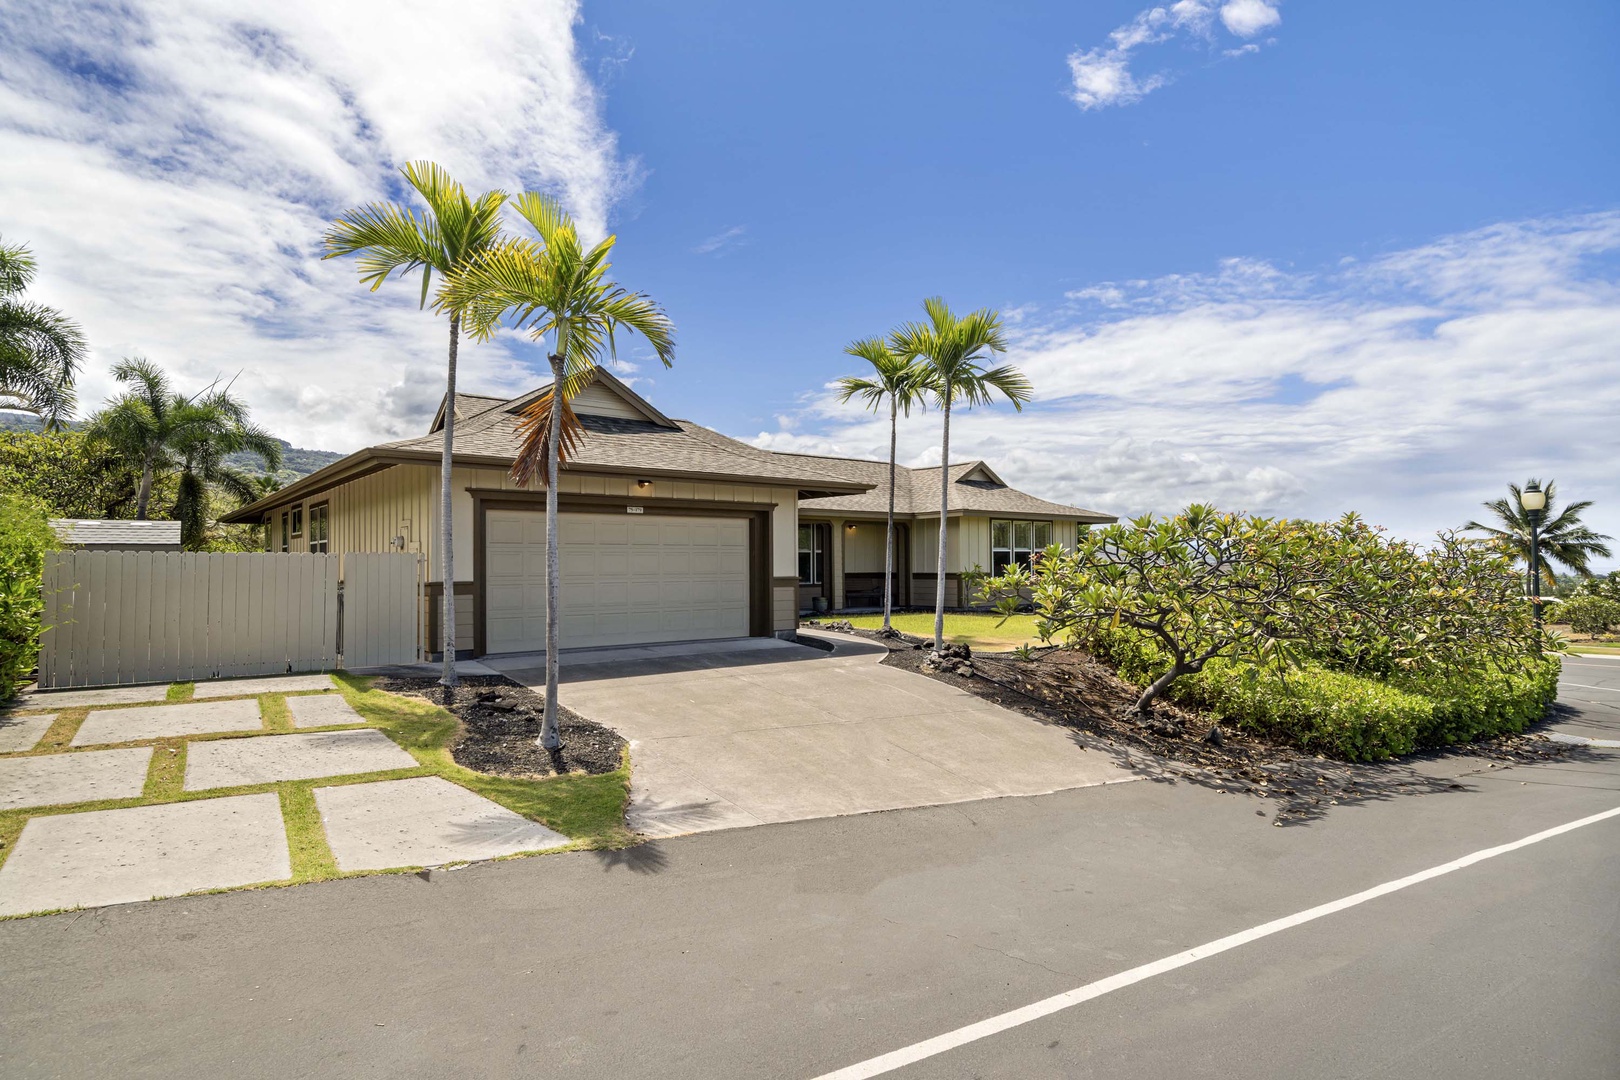 Kailua Kona Vacation Rentals, Kahakai Estates Hale - First impressions last: welcome to your home's grand facade.